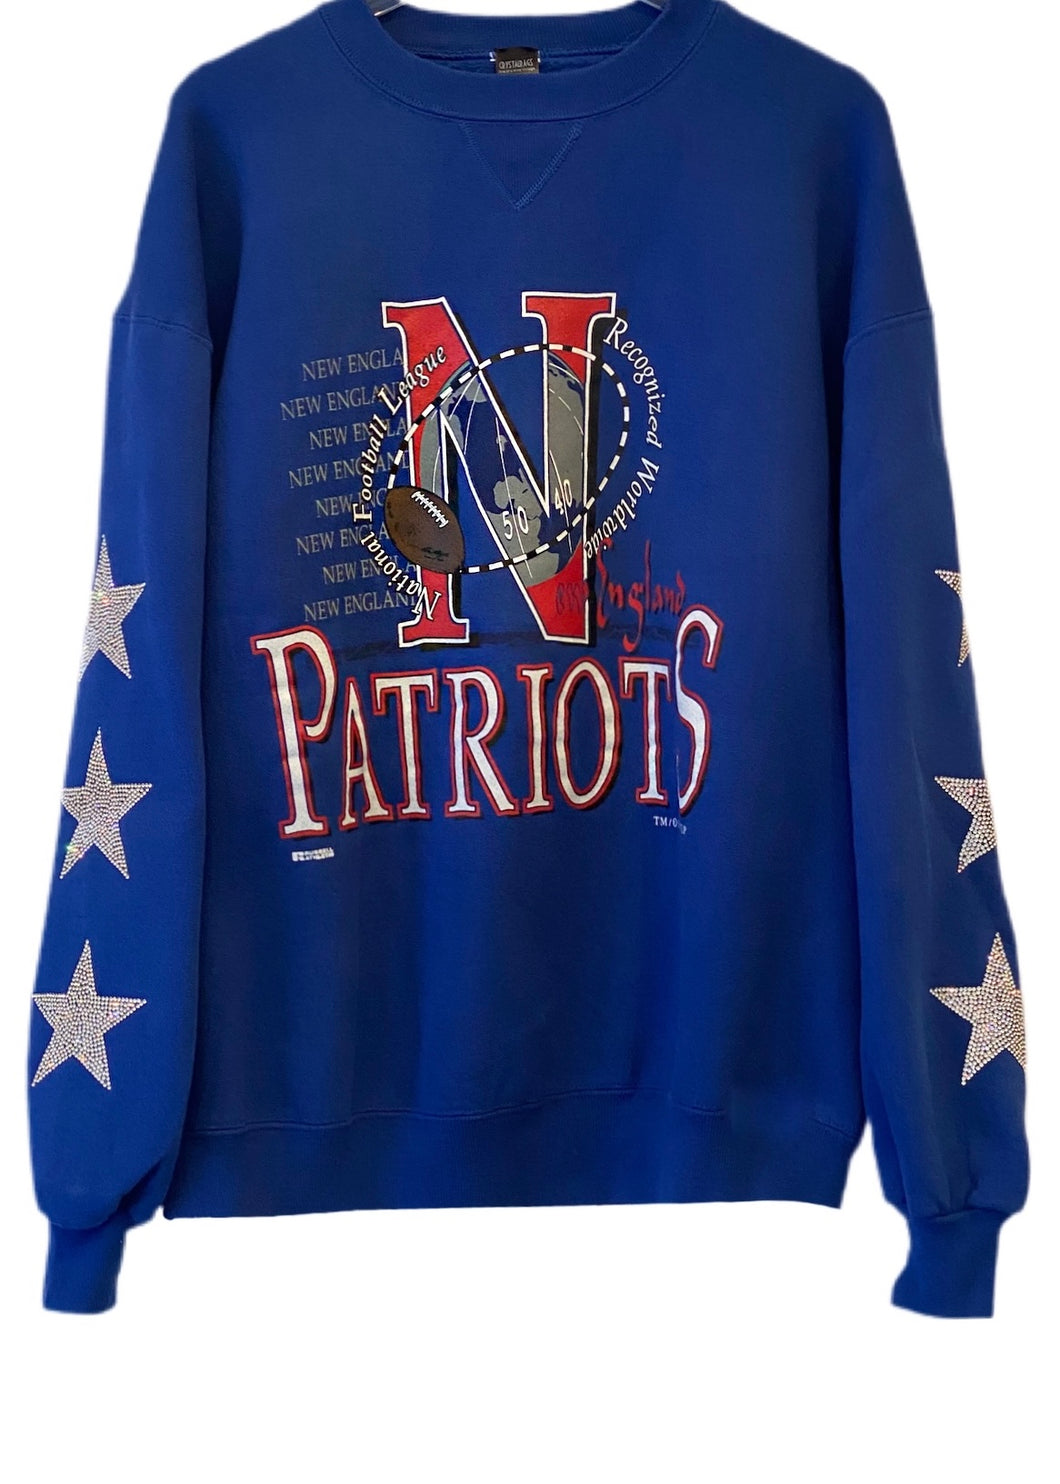 England Patriots, NFL One of a KIND Vintage Sweatshirt with Crystal Star Design